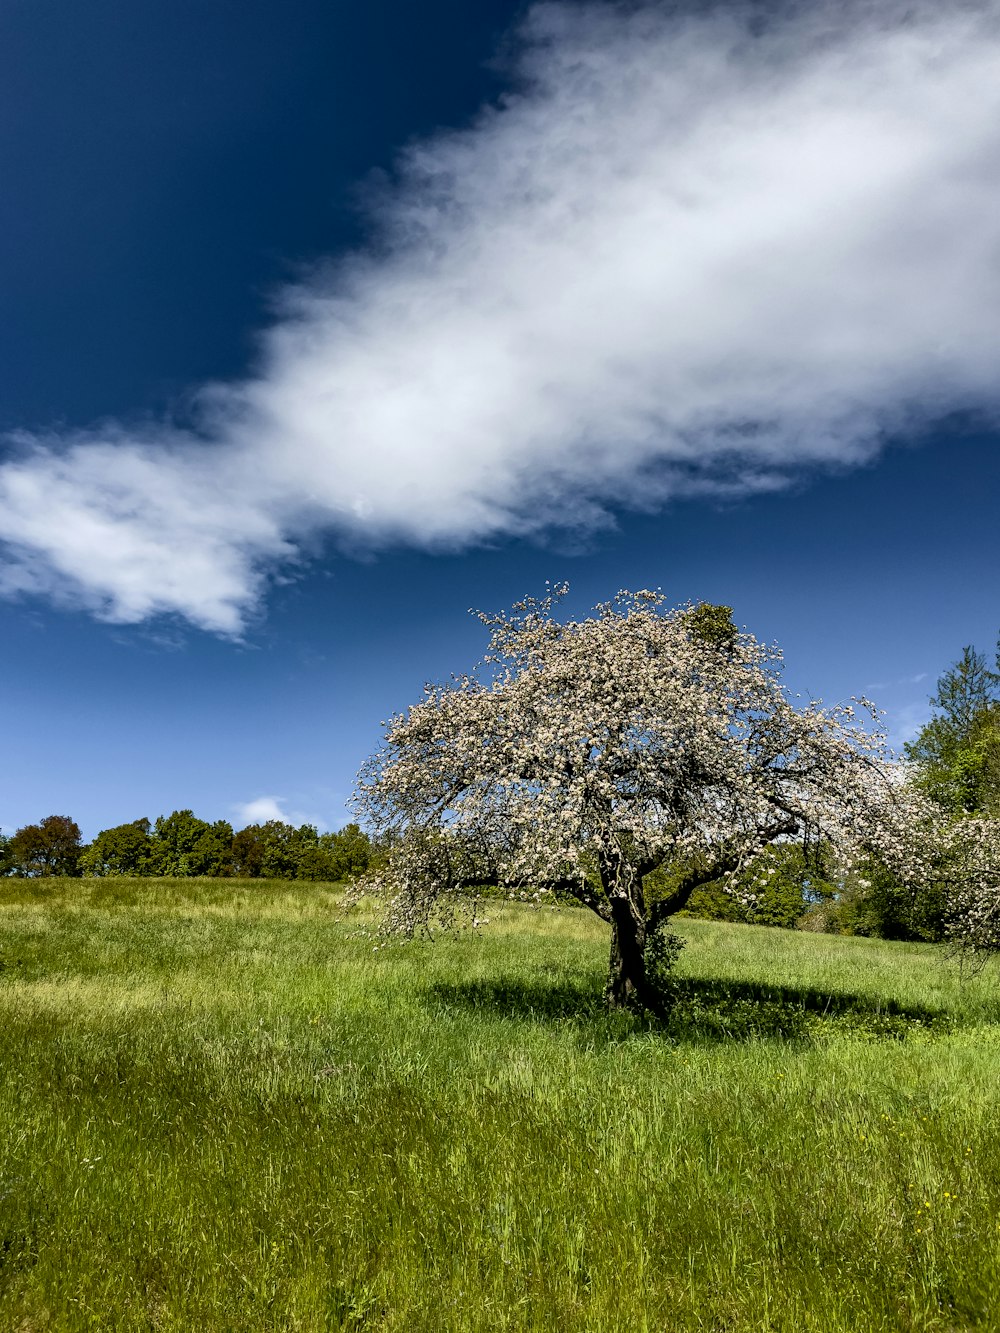 a lone tree in a grassy field under a cloudy blue sky